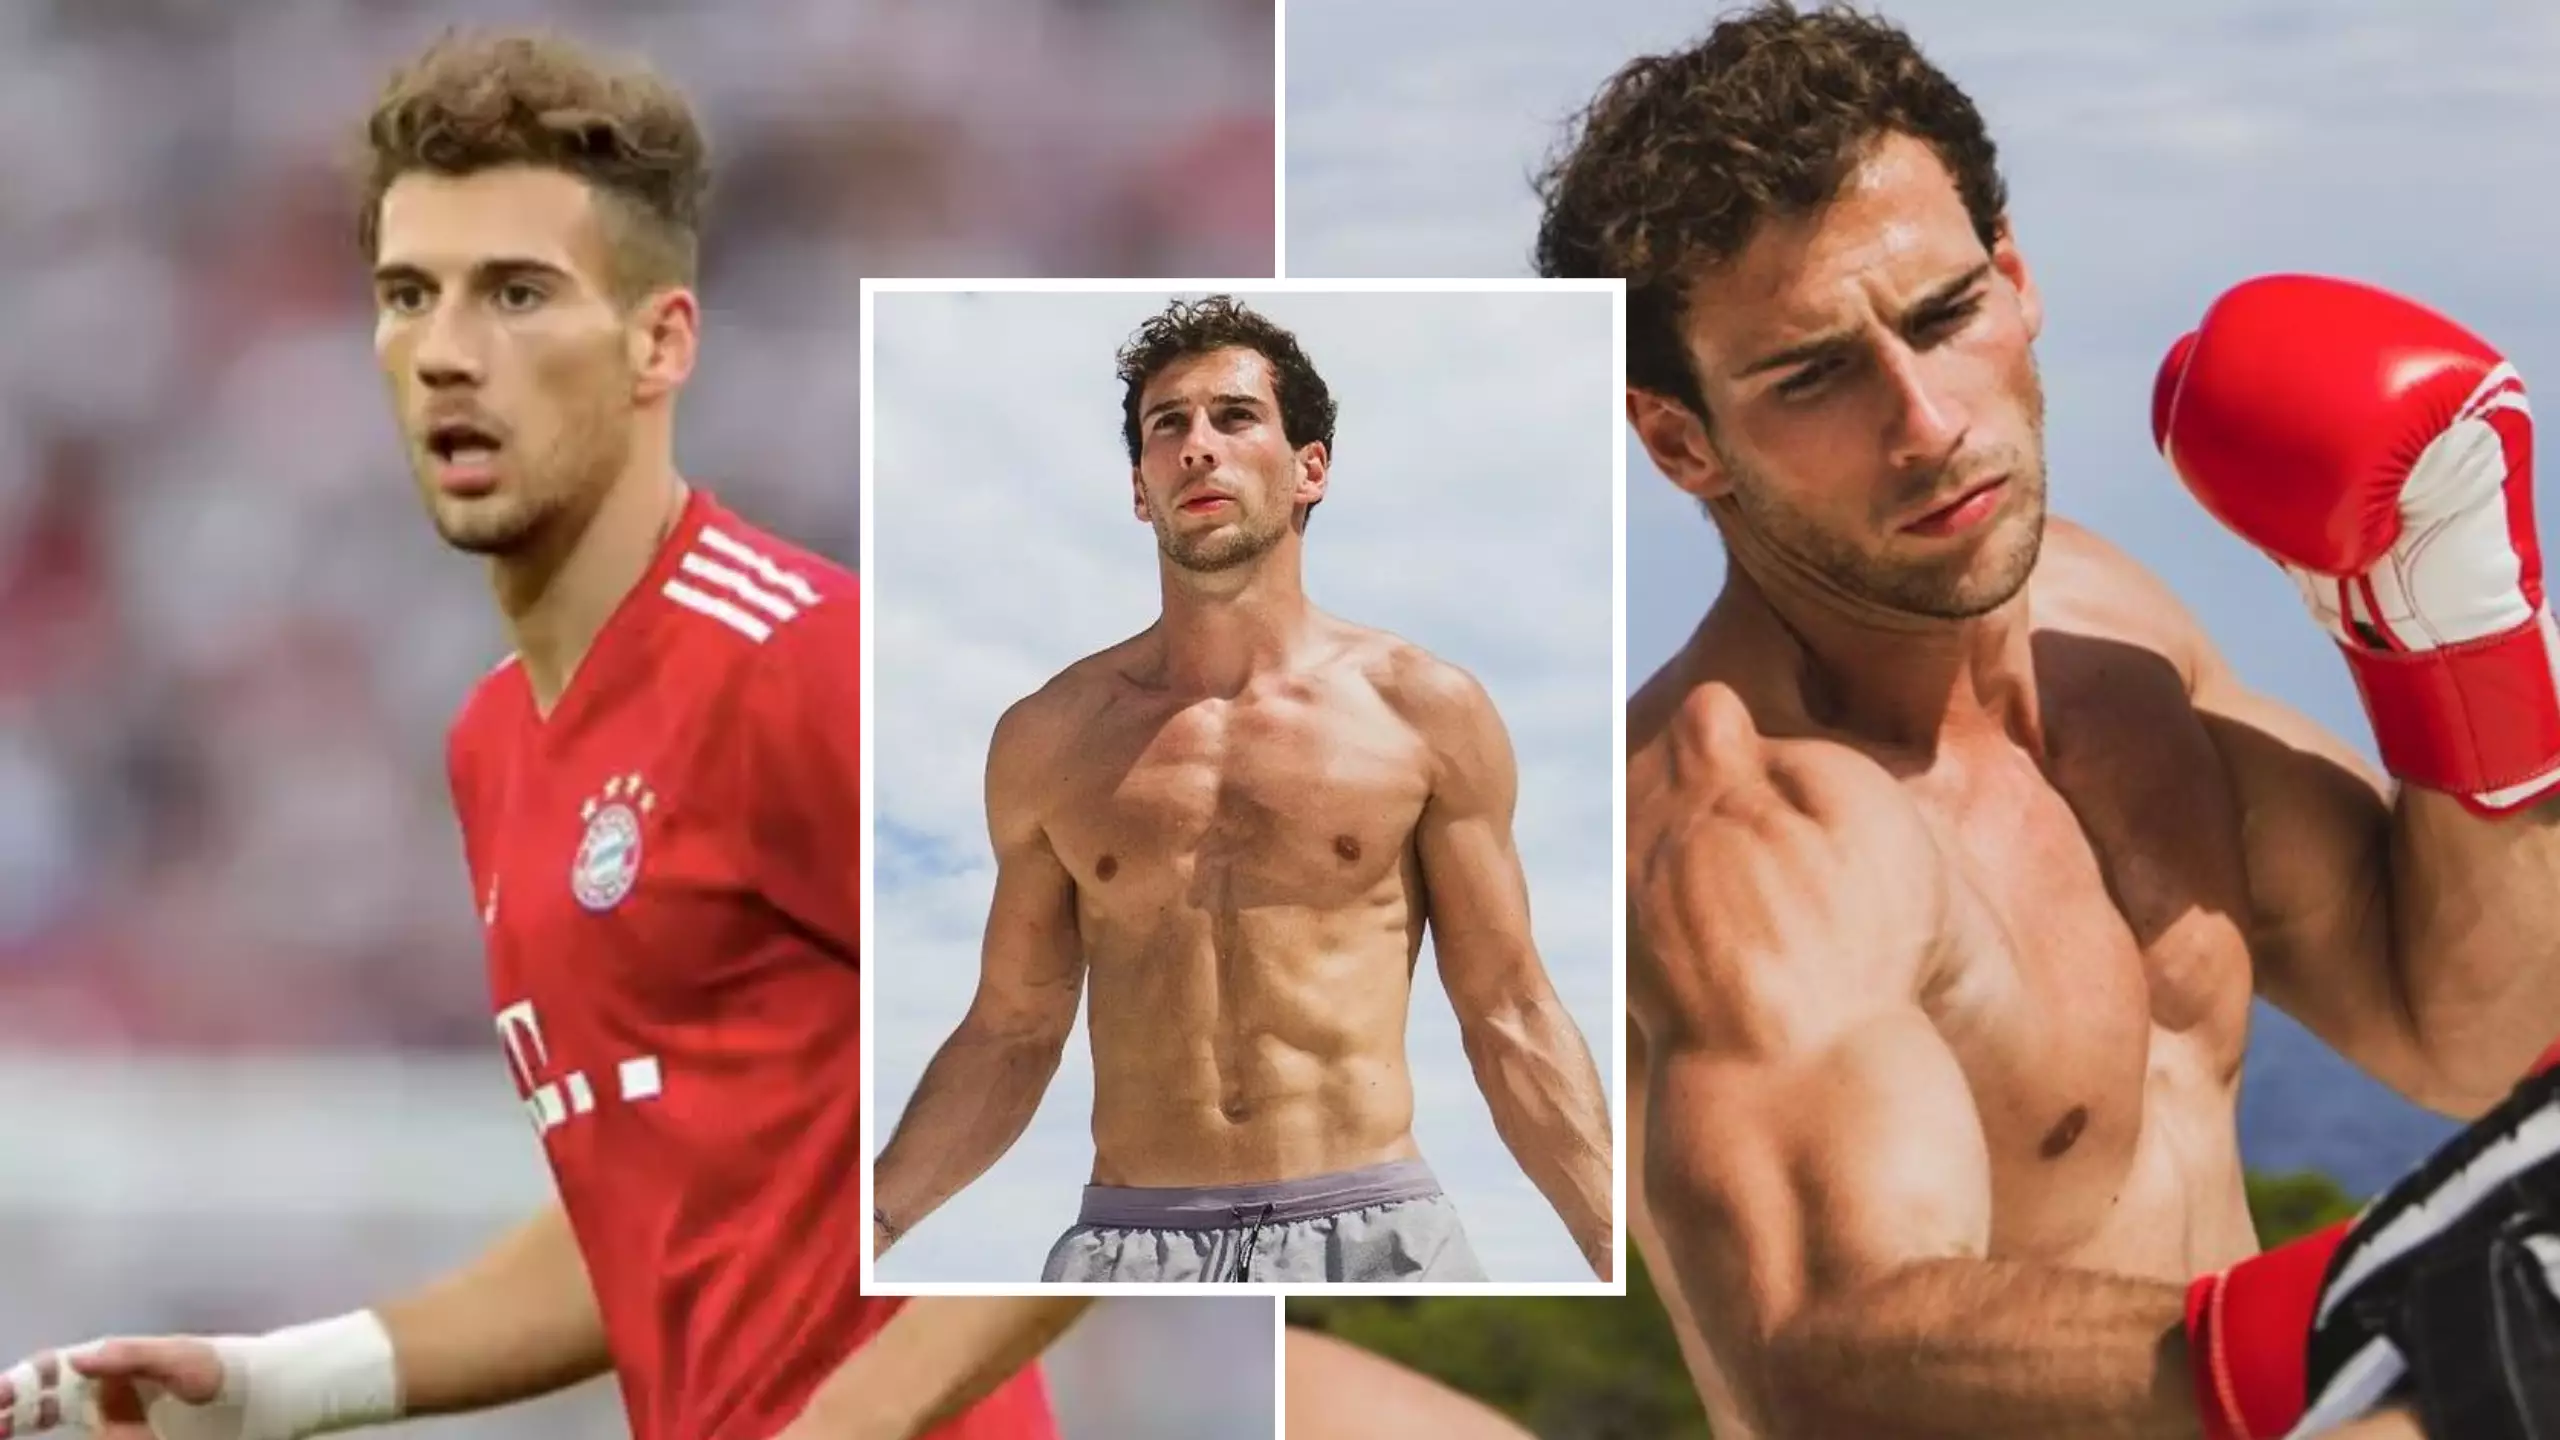 Bayern Munich's Leon Goretzka Has Somehow Got Even More Shredded After Insane Body Transformation